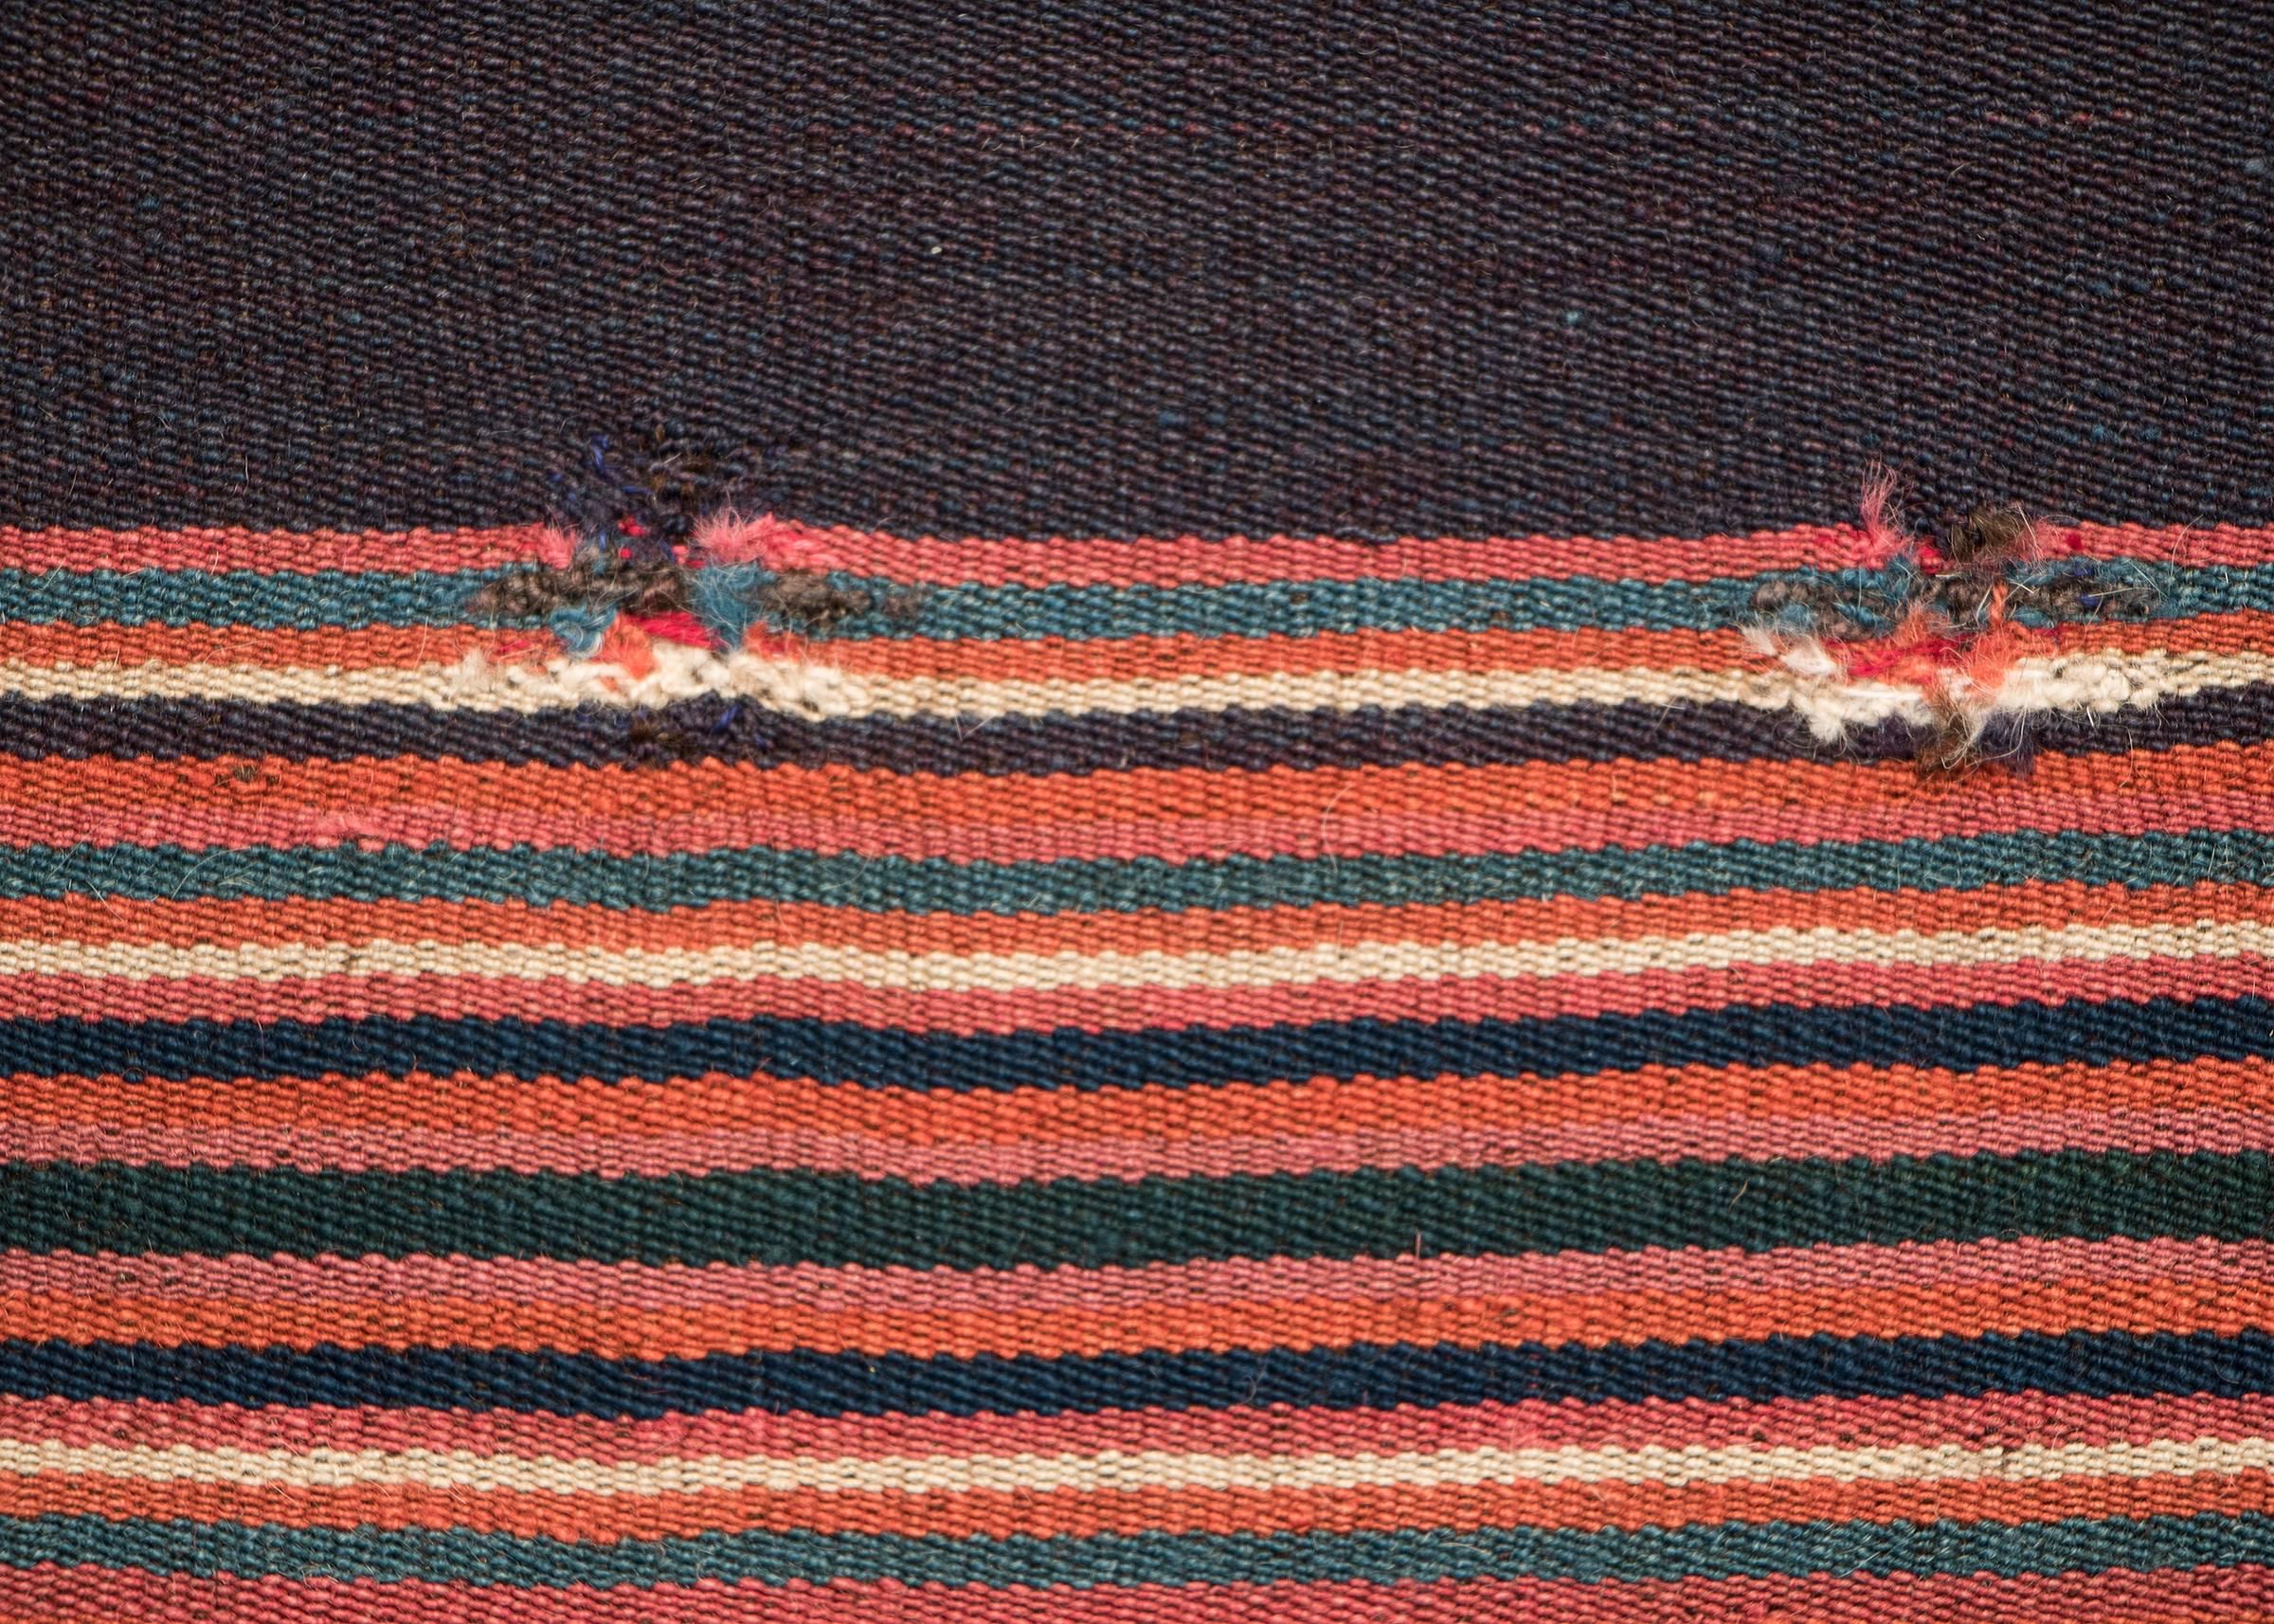 Bolivian Aymara Camelid Wool Poncho, Bolivia, Mid-19th Century